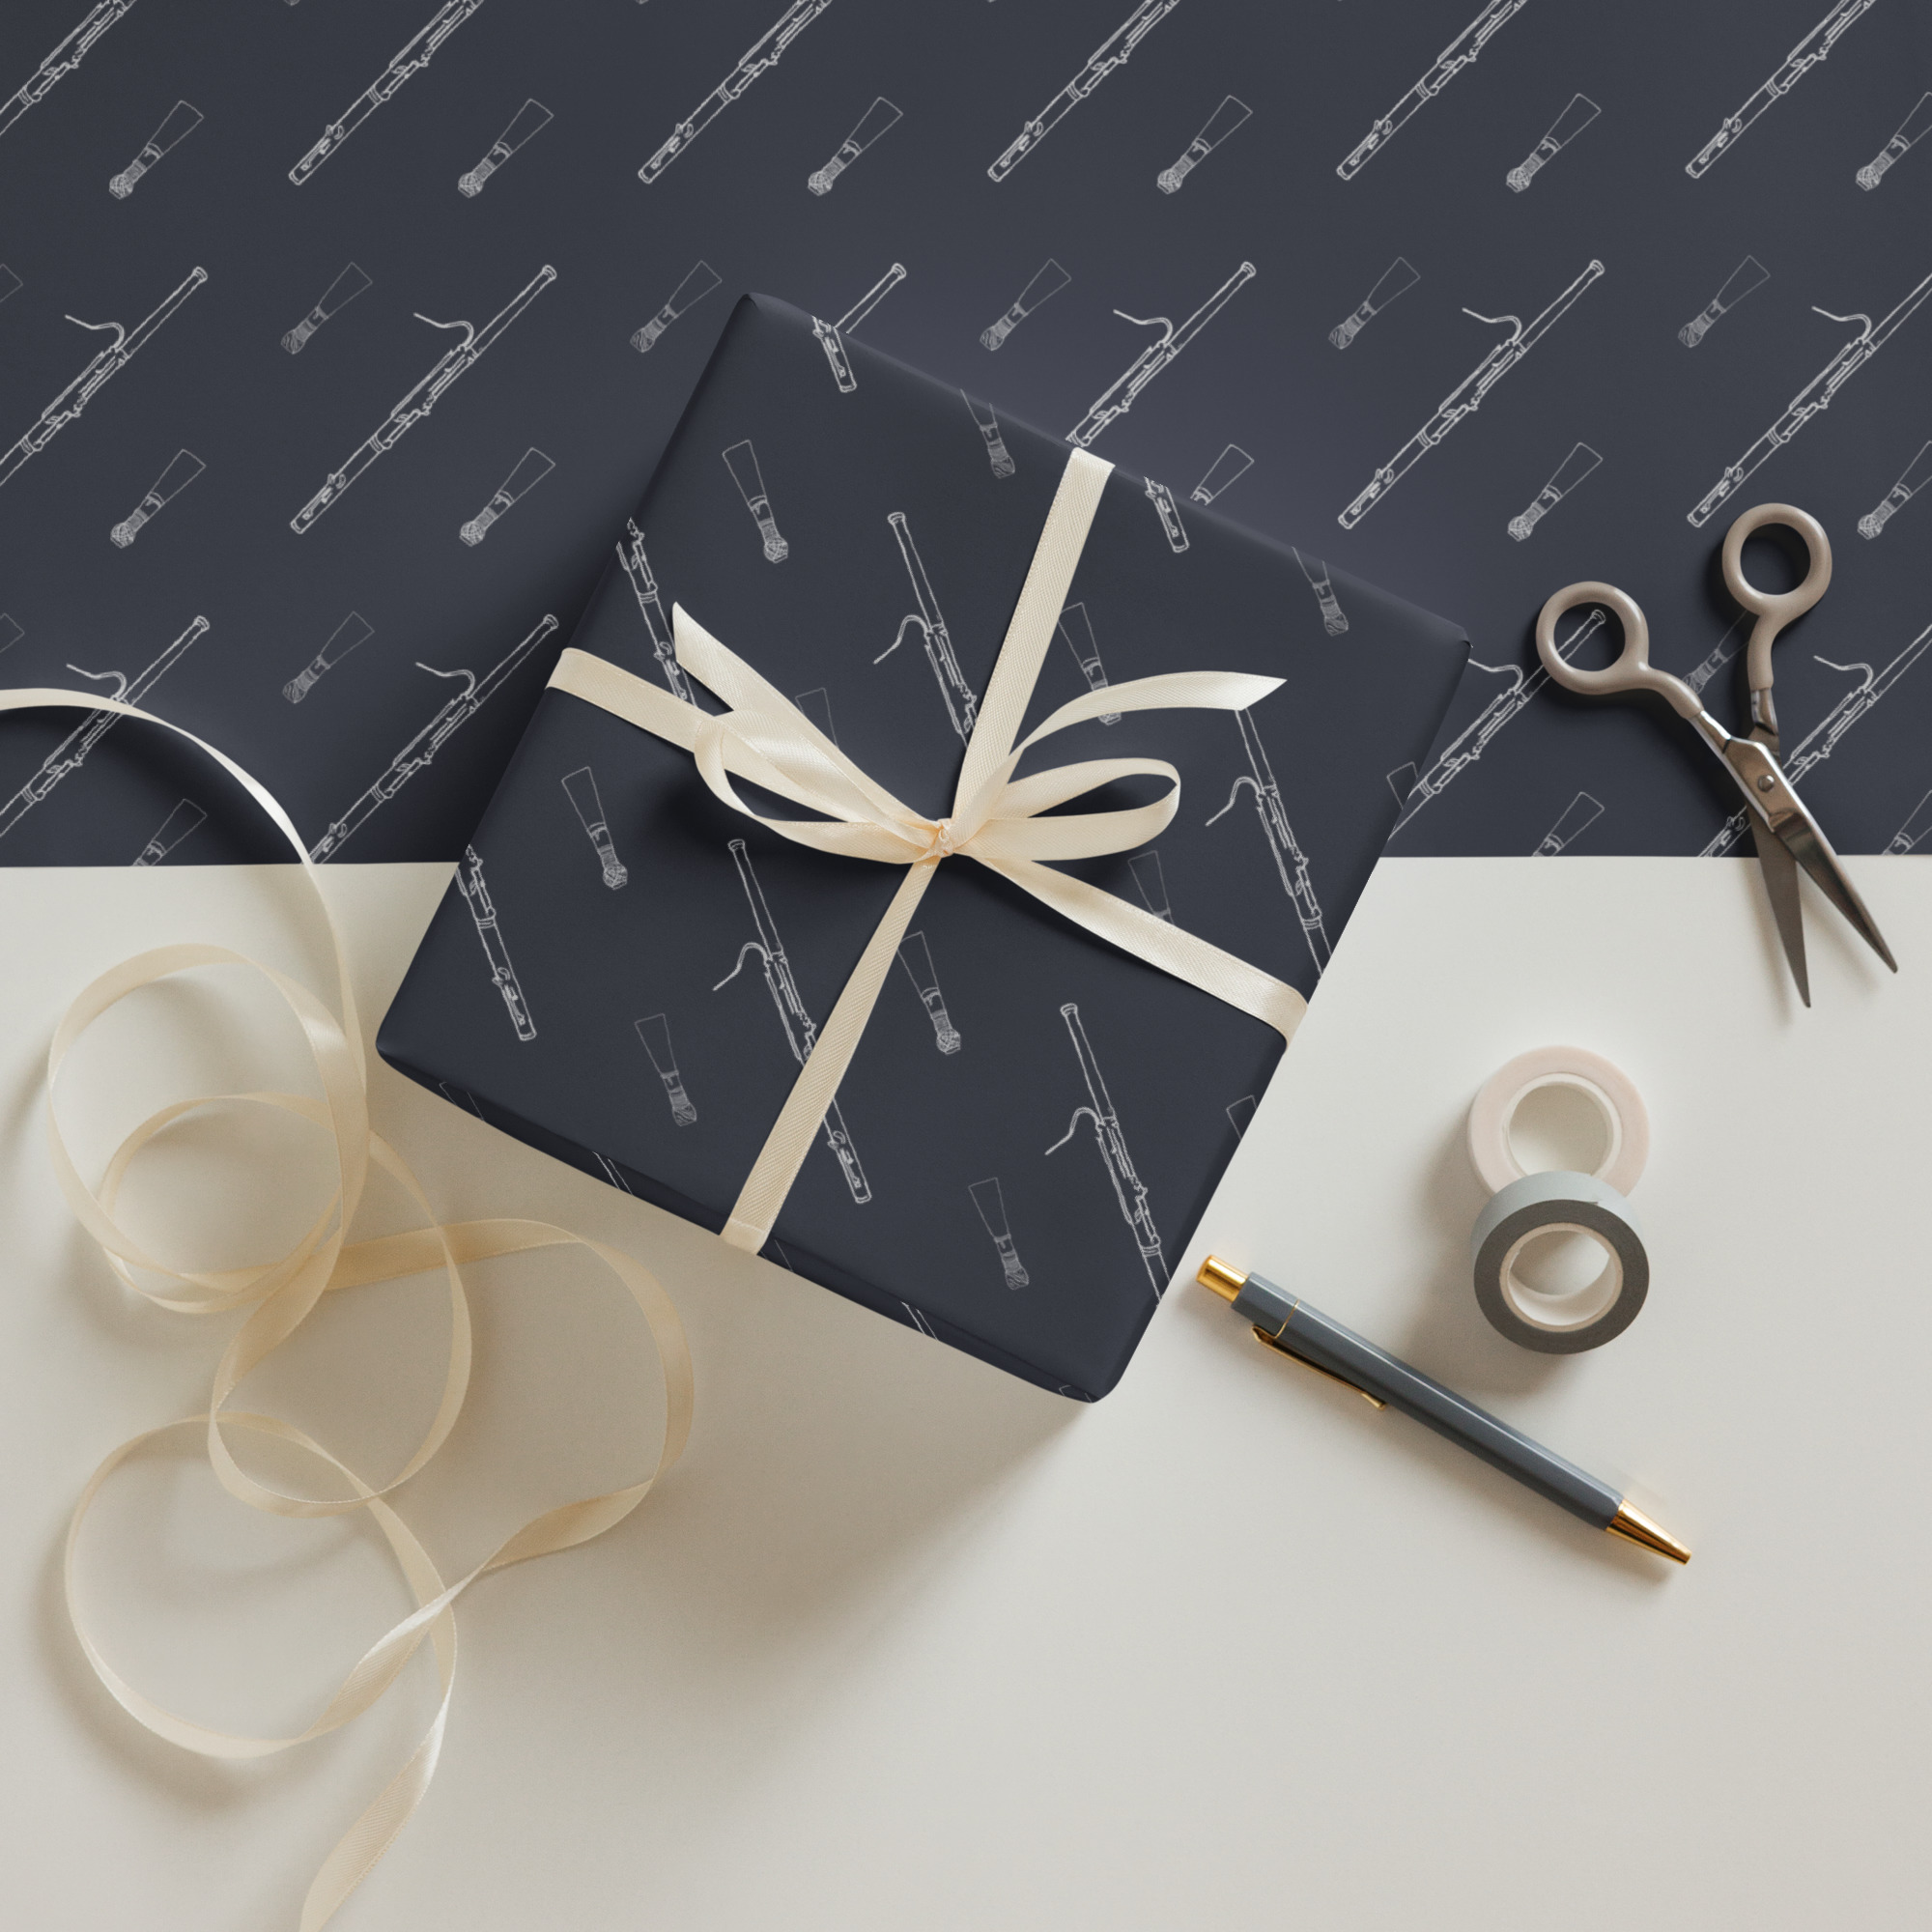 Burgundy Akita Wrapping Paper 26X833